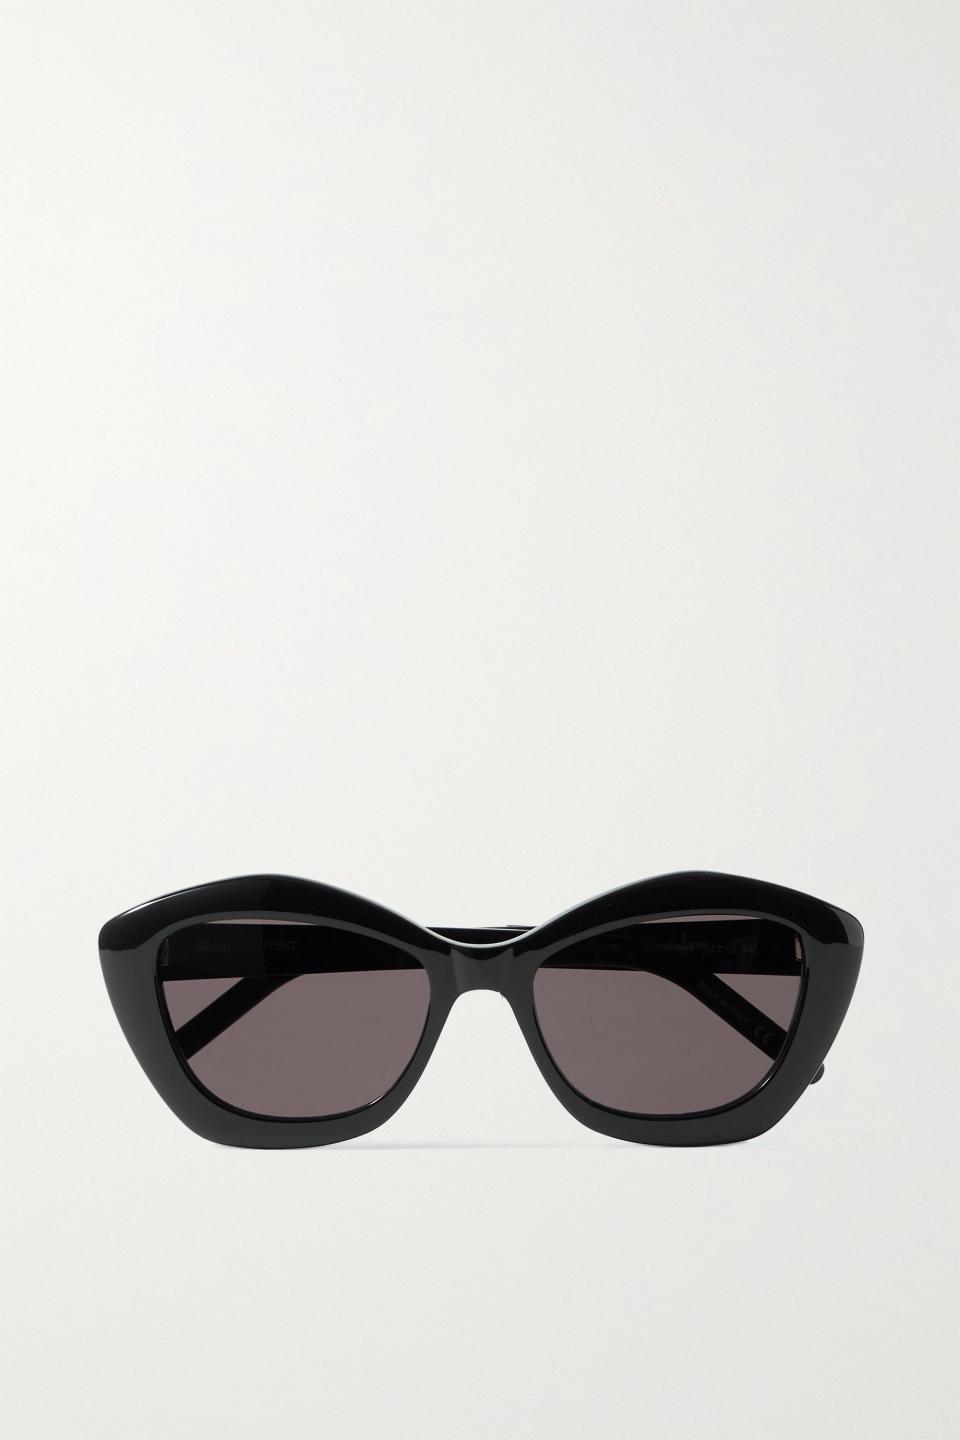 4) Cat-Eye Sunglasses